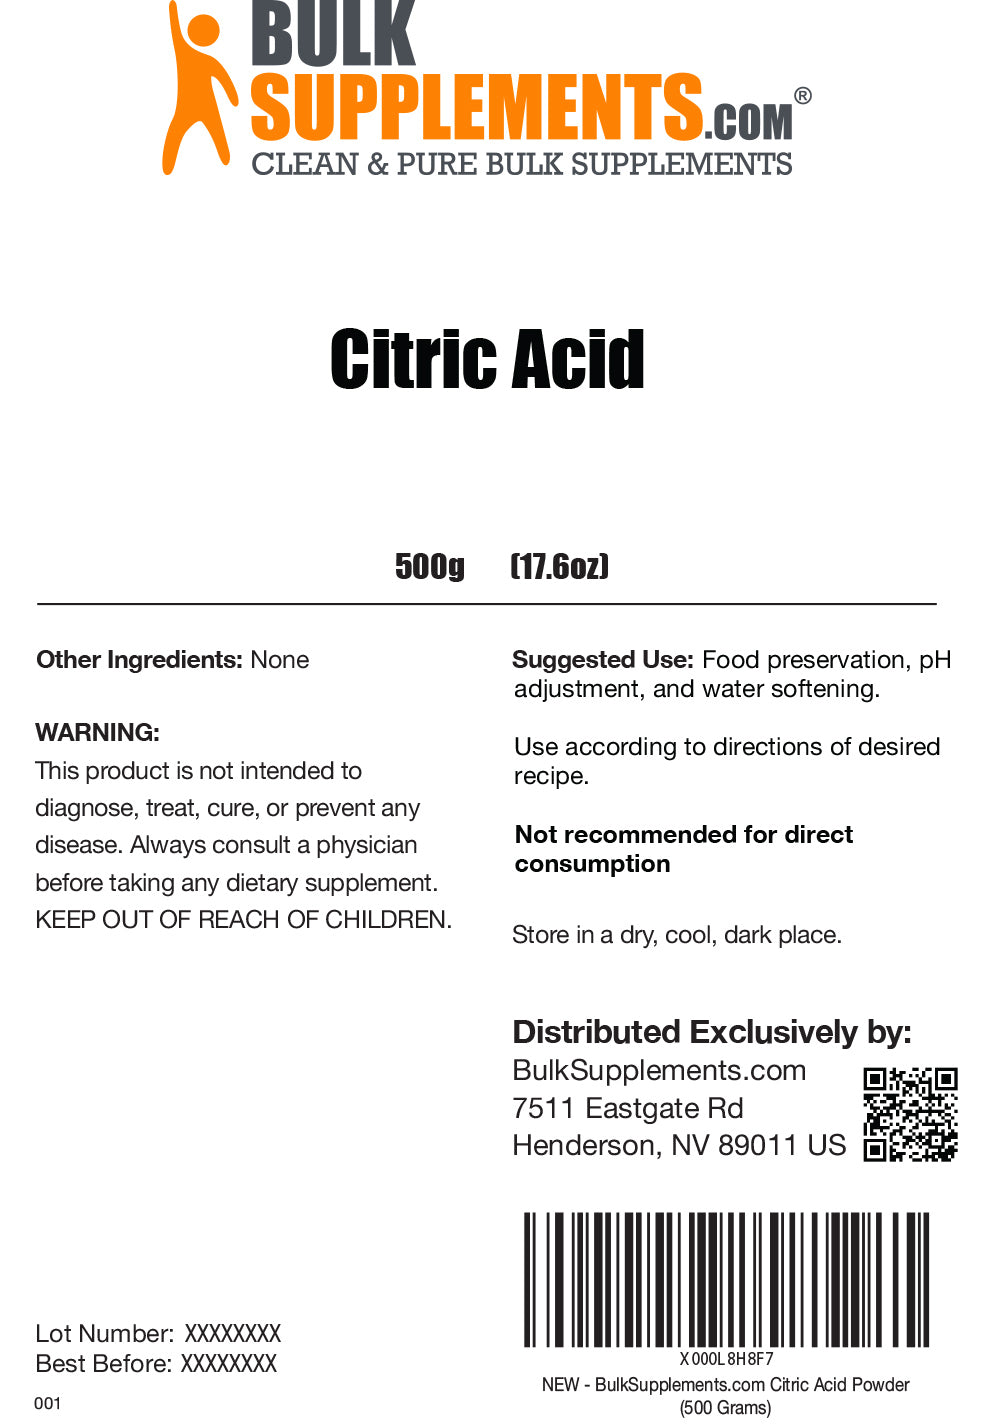 Citric Acid powder label 500g